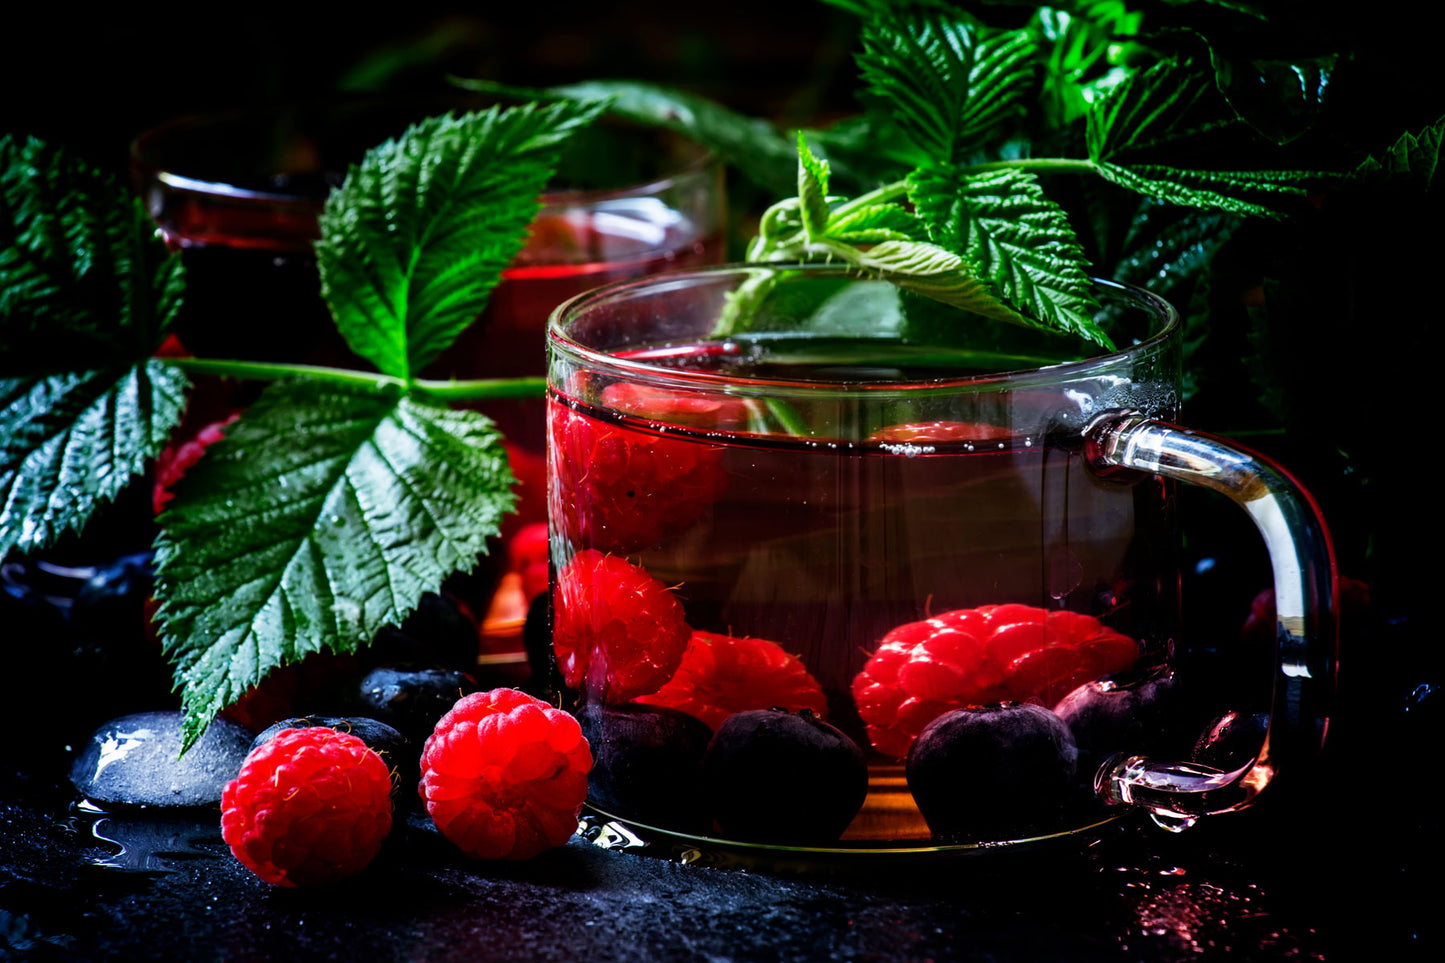 Black Tea and Berries - Fragrance